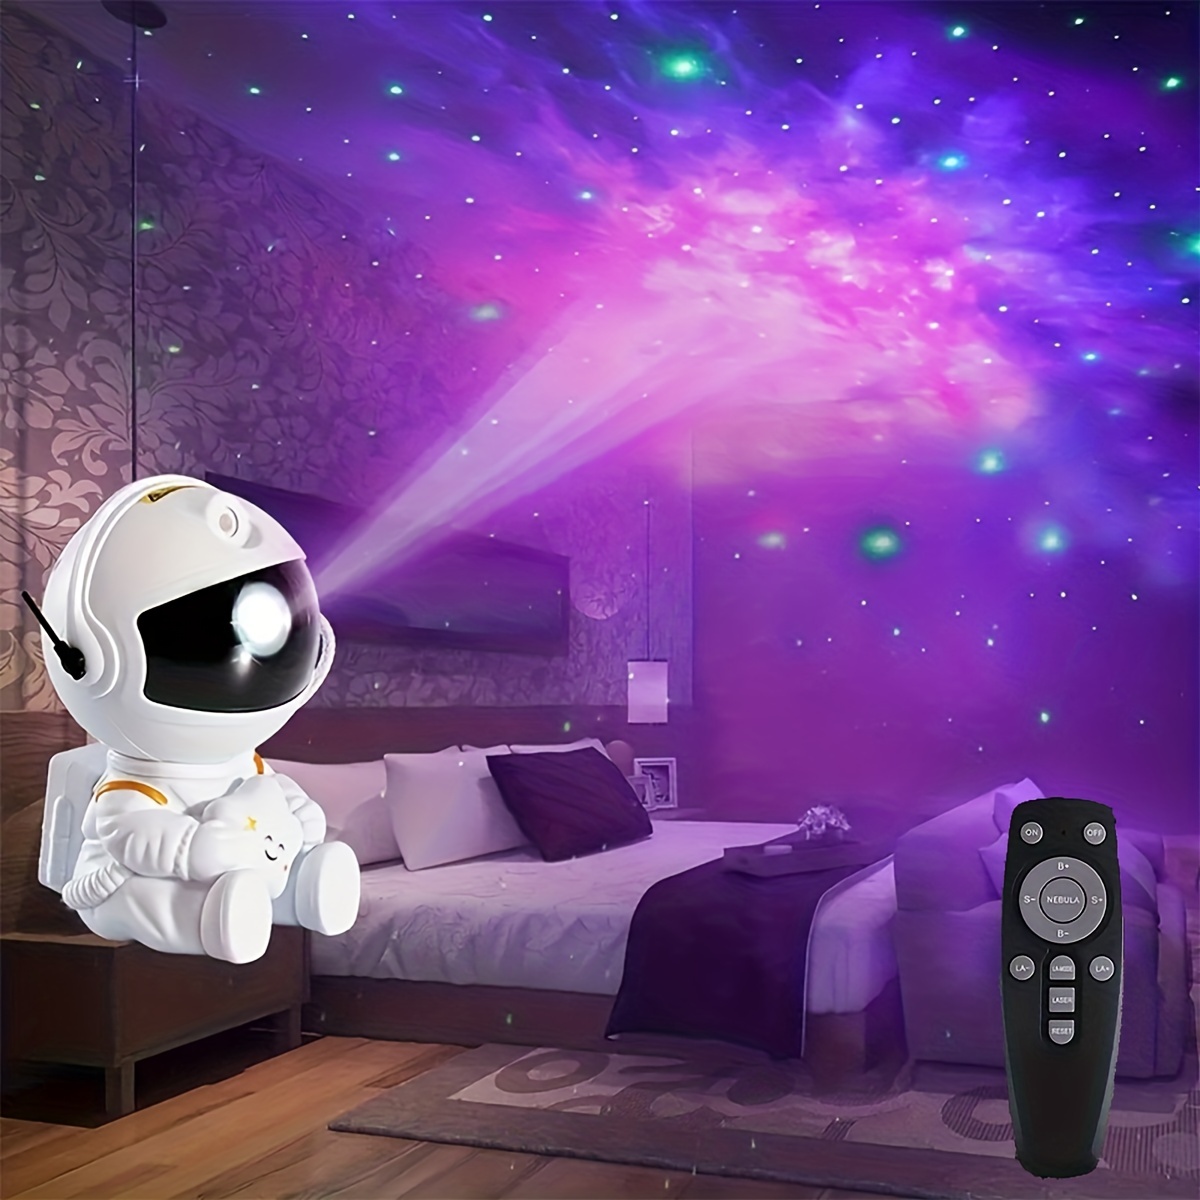 RnnTuu LED Starry Sky Night Light 5V USB Powered Projector Lamp